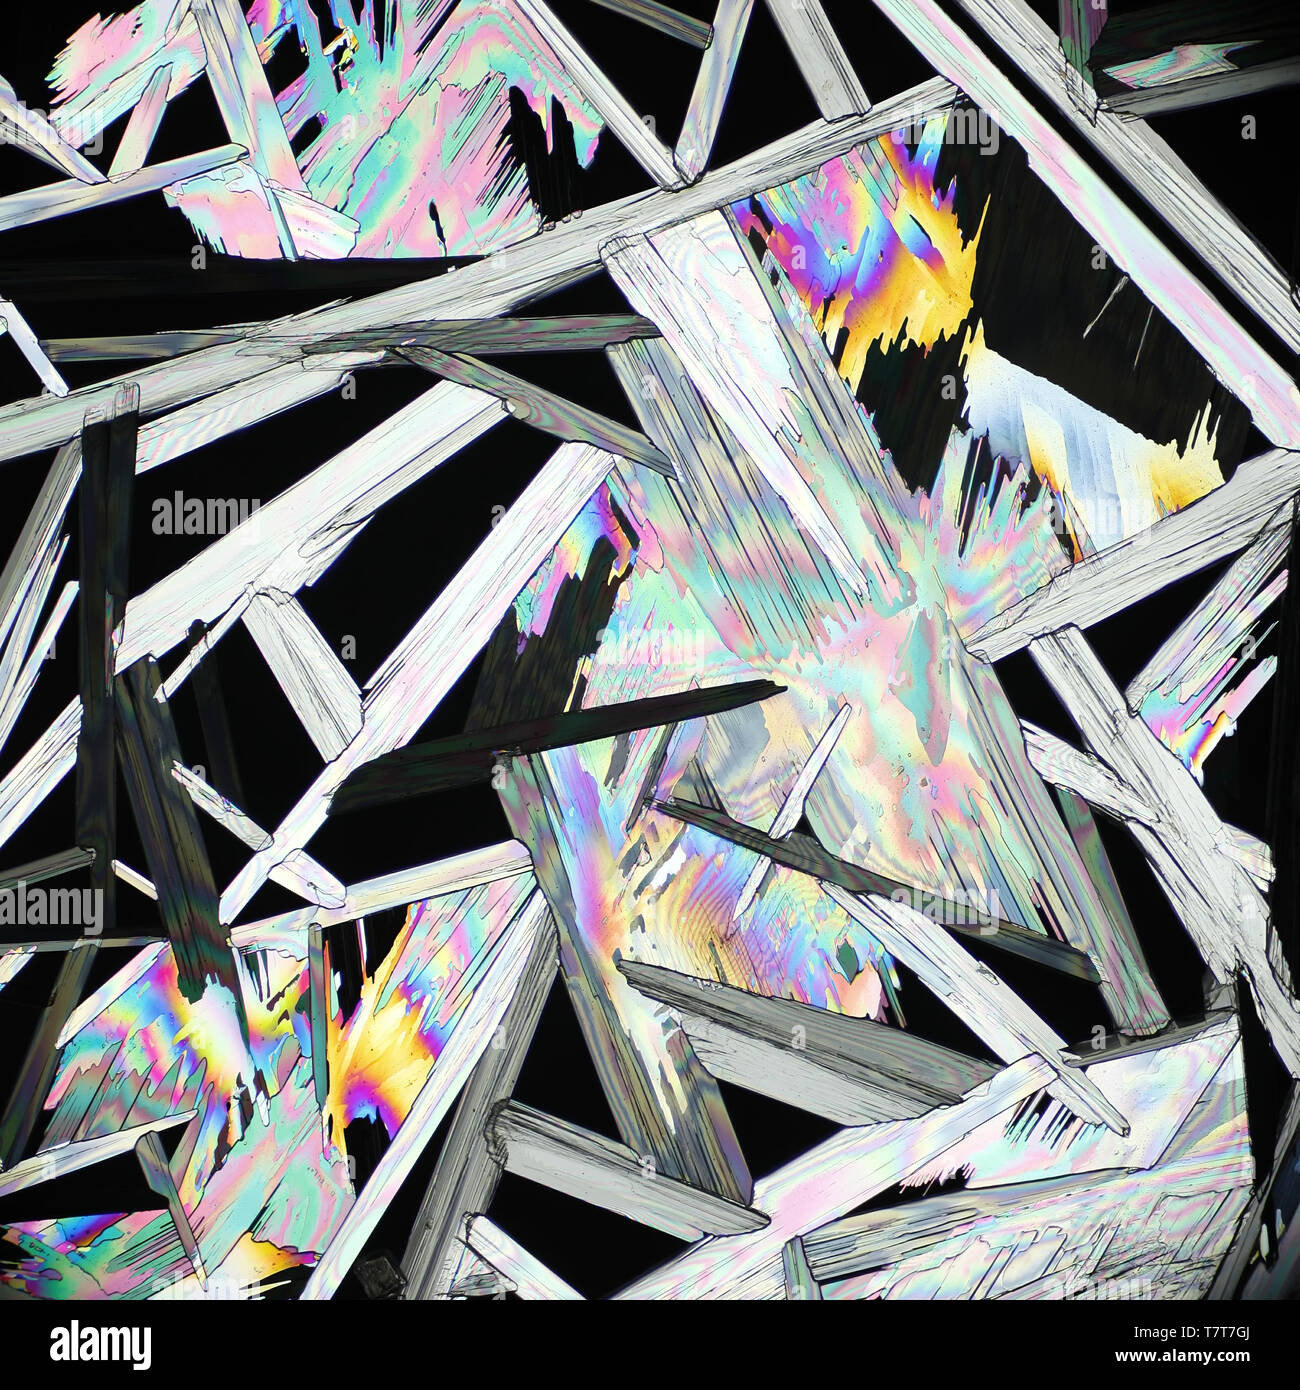 Chemikalien (dimethylglyoxime) kristallisiert am Mikroskop Objektträger und fotografierte in Cross-polarisiertem Licht Stockfoto